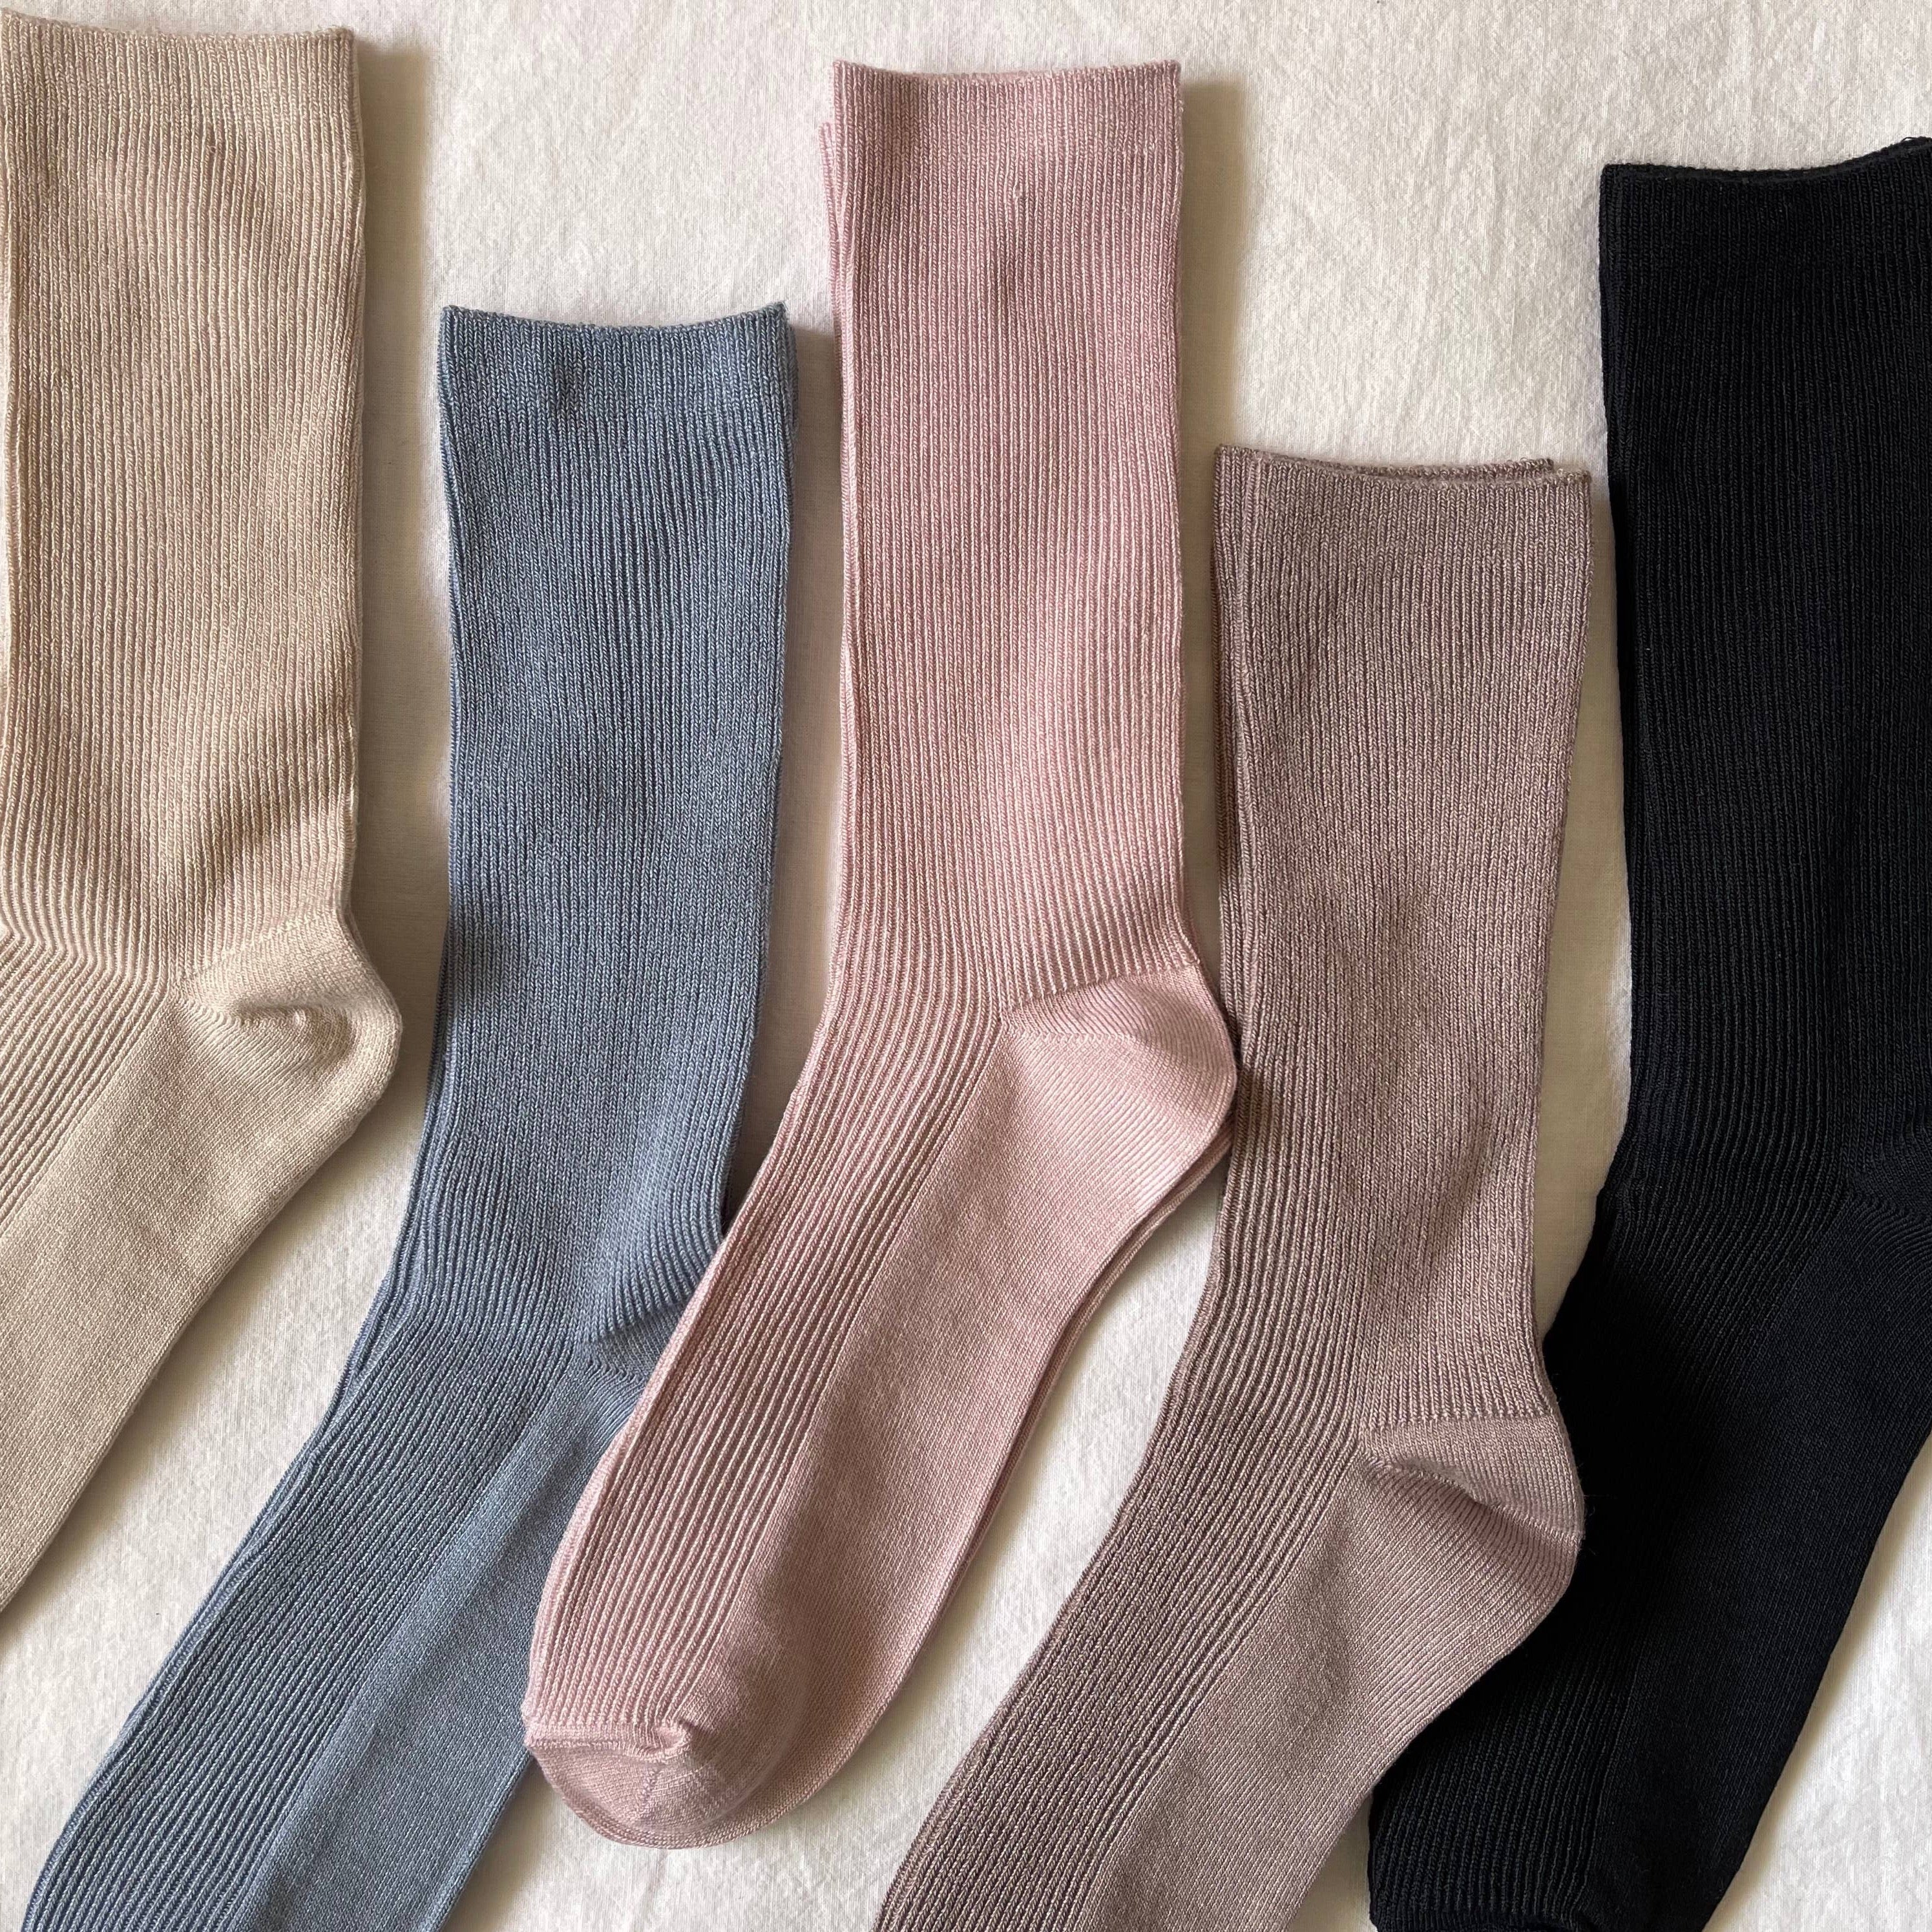 Amazon.com: THERAFIRM Men's Trouser Socks with Mild (15-20mmHg) Compression  - X-Large - Khaki : Health & Household